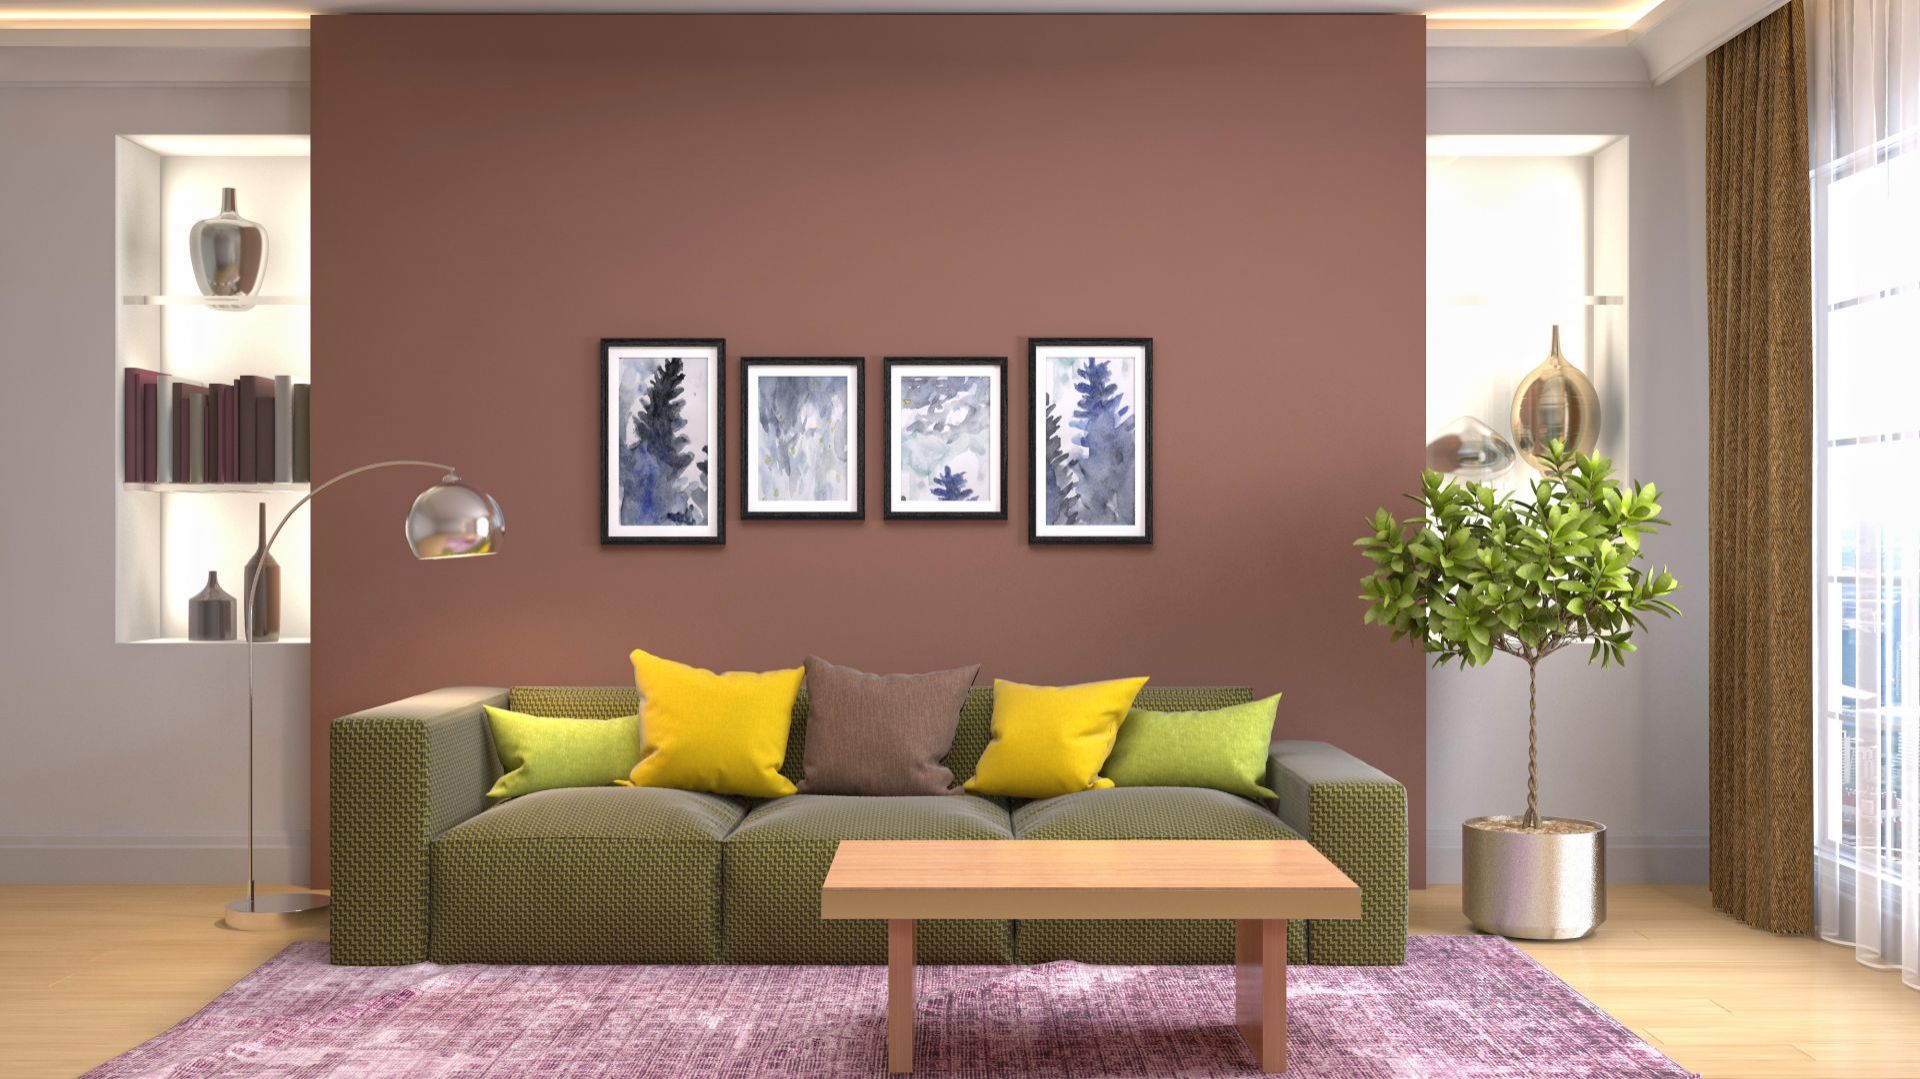 Modne kolory ścian: 3 pomysły na salon w odcieniach brązu